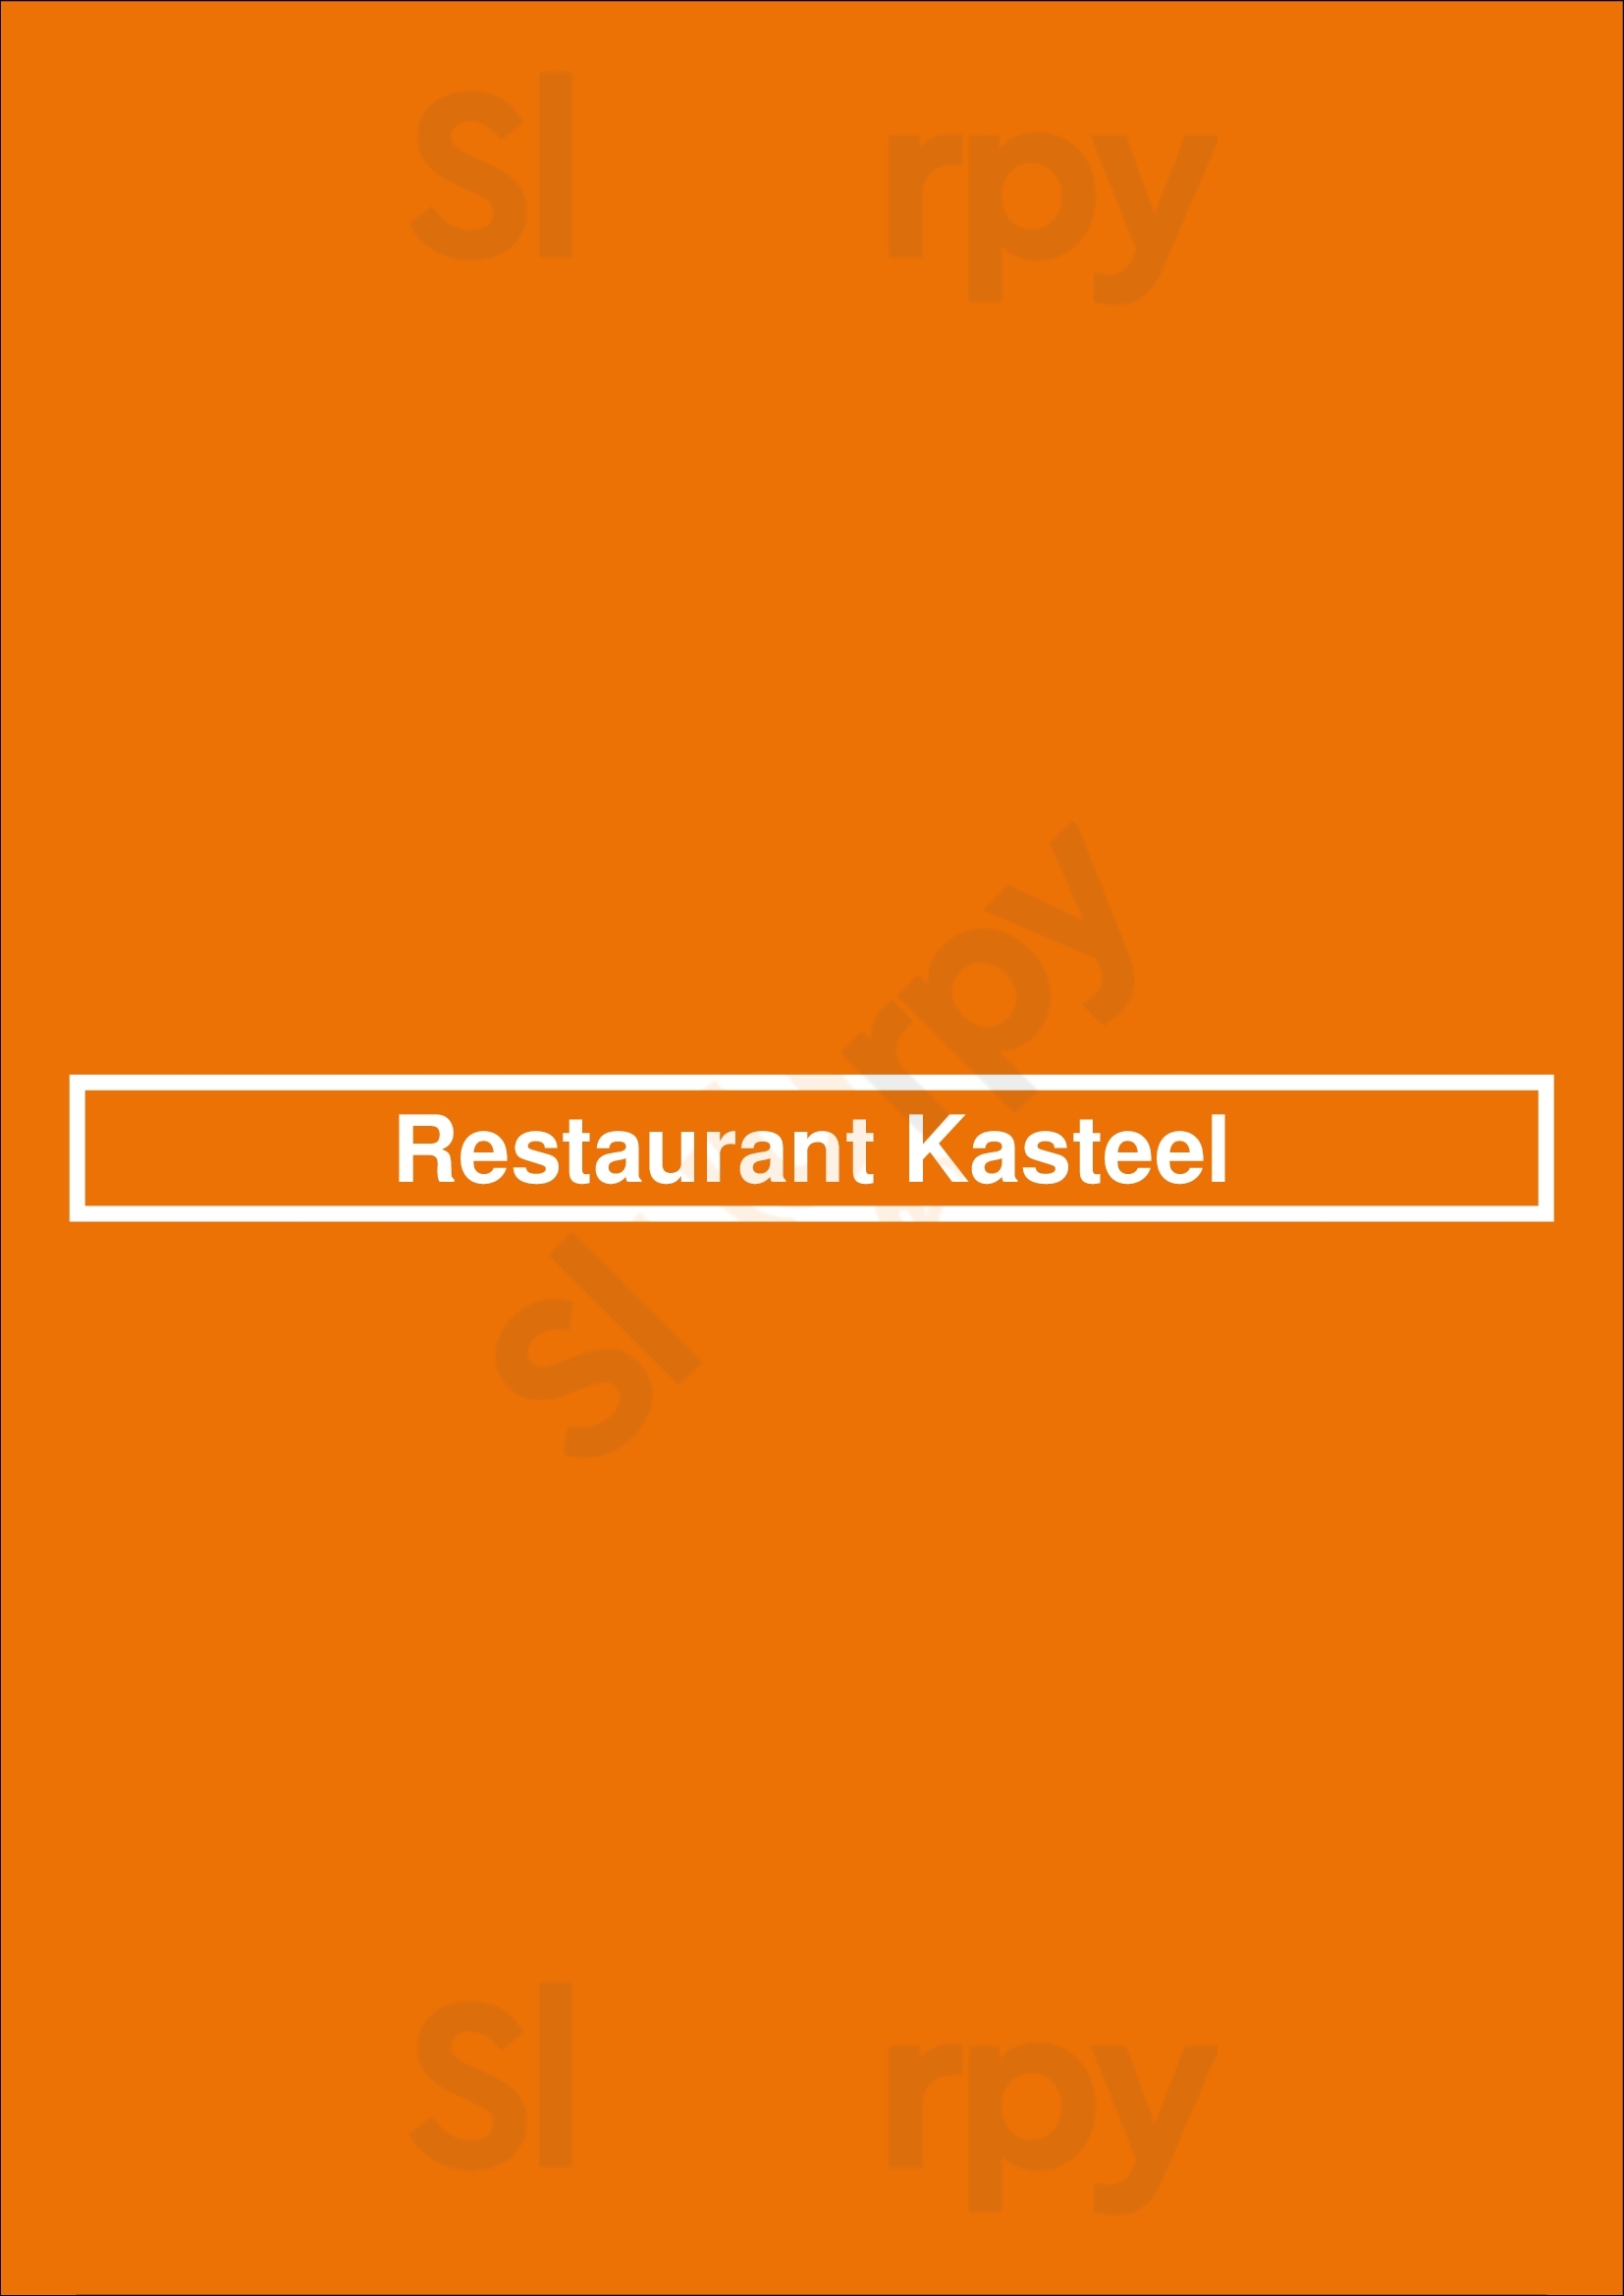 Restaurant Kasteel Mönchengladbach Menu - 1